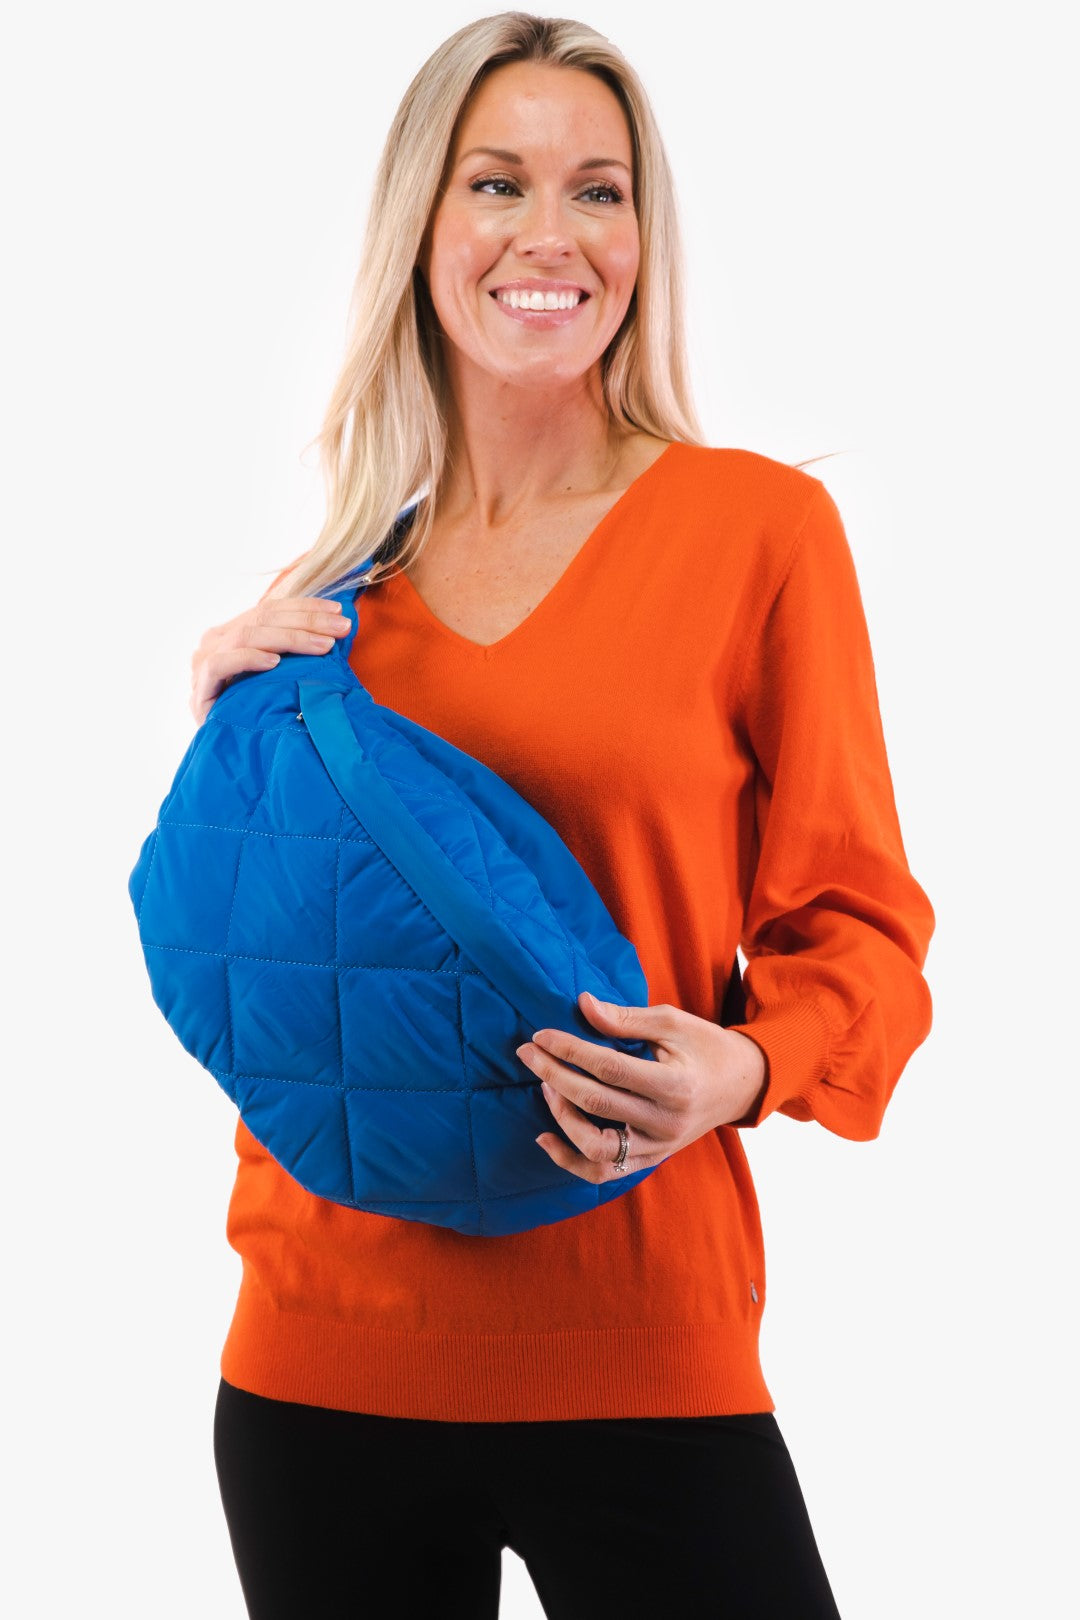 Blue Duna Inwear bag